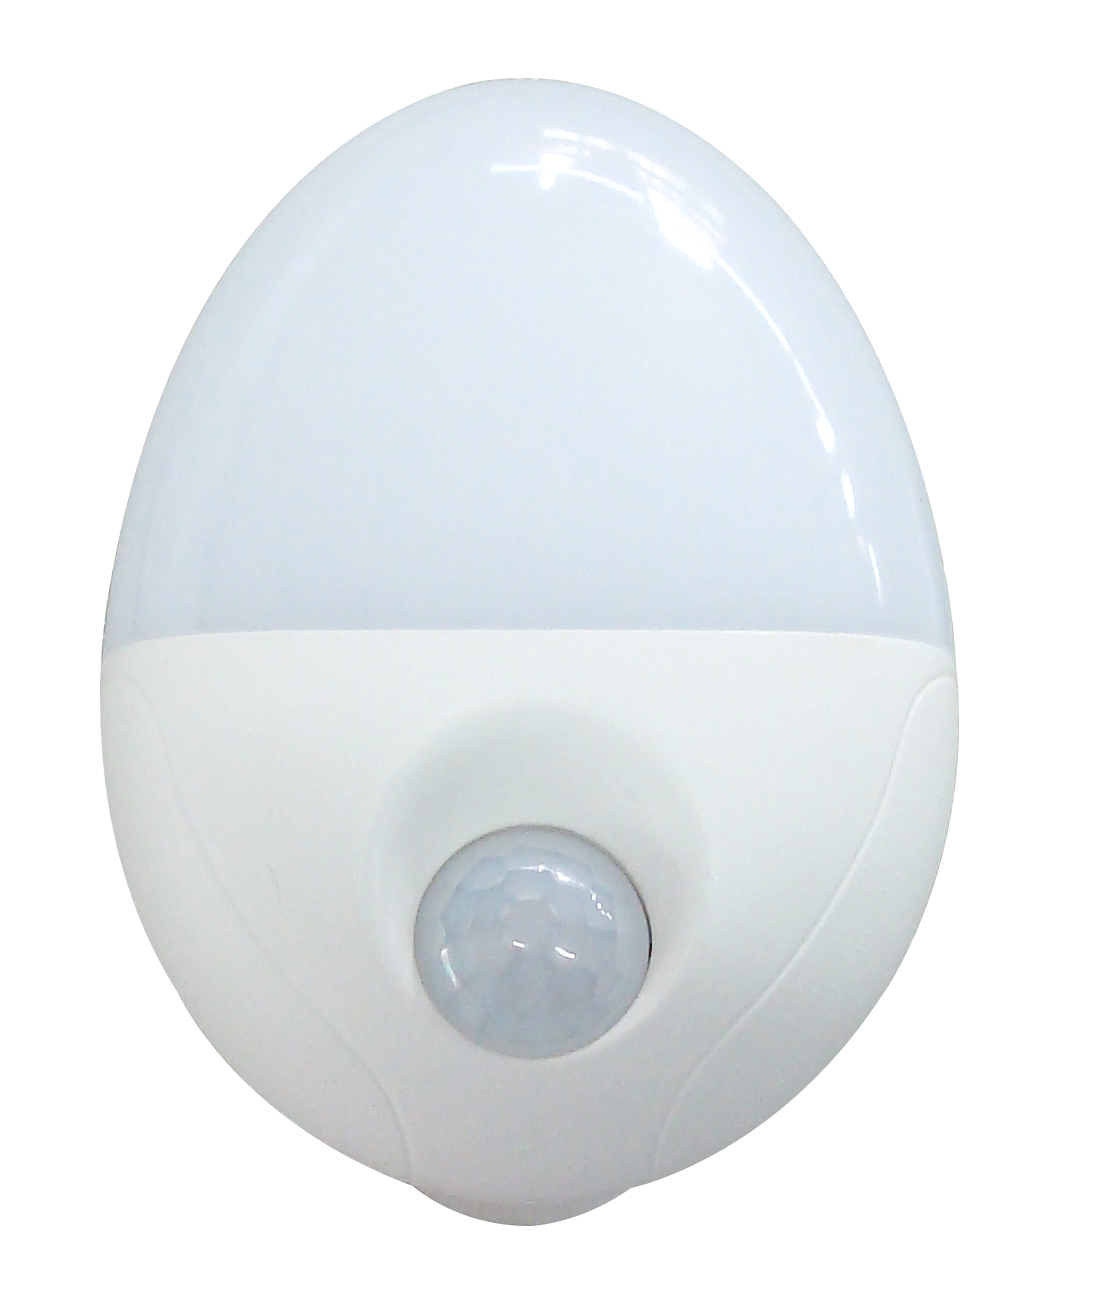 XS-008-US-Plug-2W-110V-Infrared-Human-Body-Induction-Lamp-Plug-in-PIR-Motion-Sensor-Night-Light-1789424-2